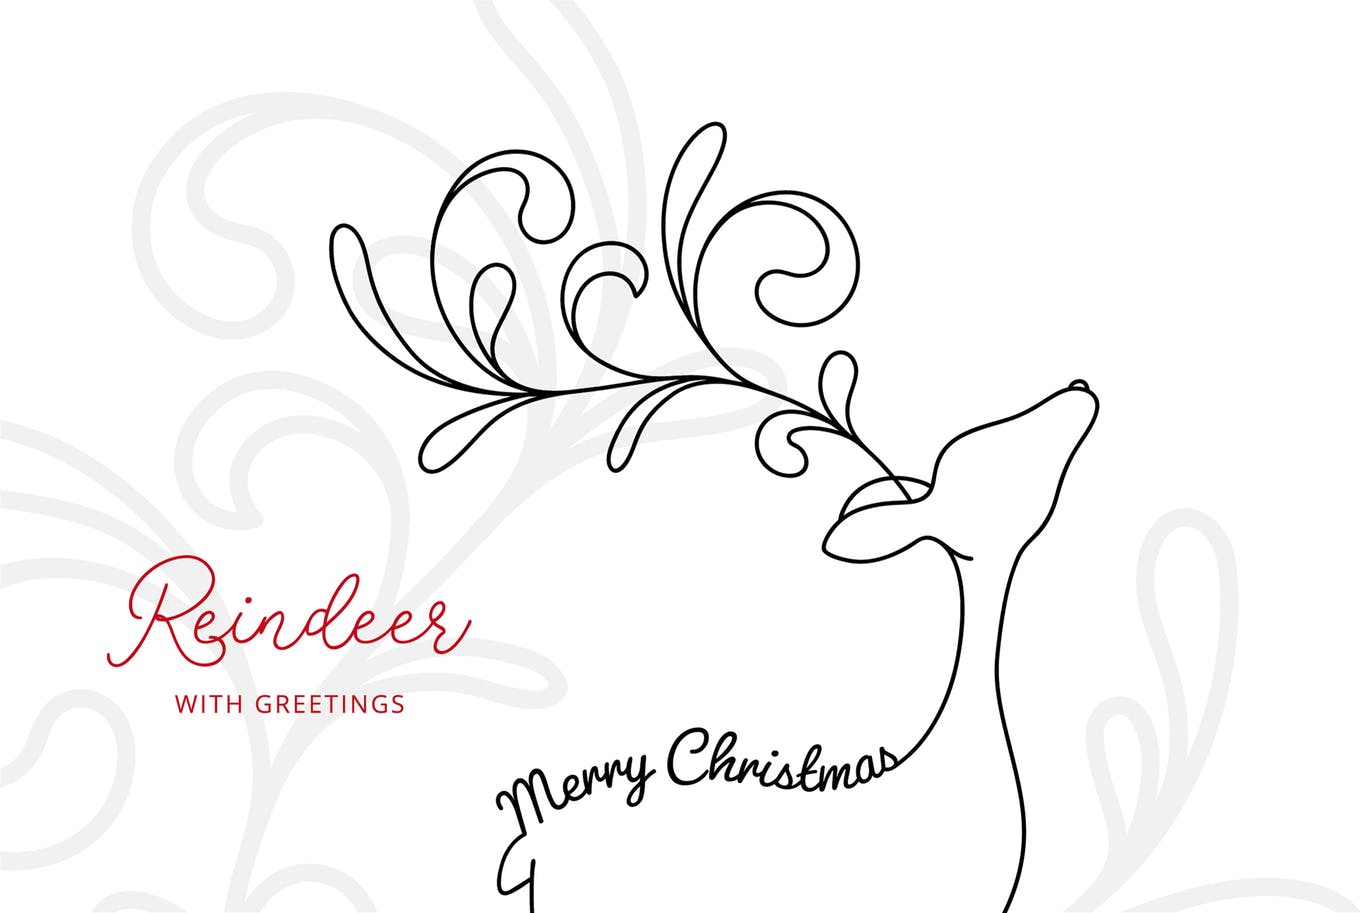 驯鹿线条手绘艺术矢量插画素材 Reindeer with Greetings – Line Art Vector Drawing插图